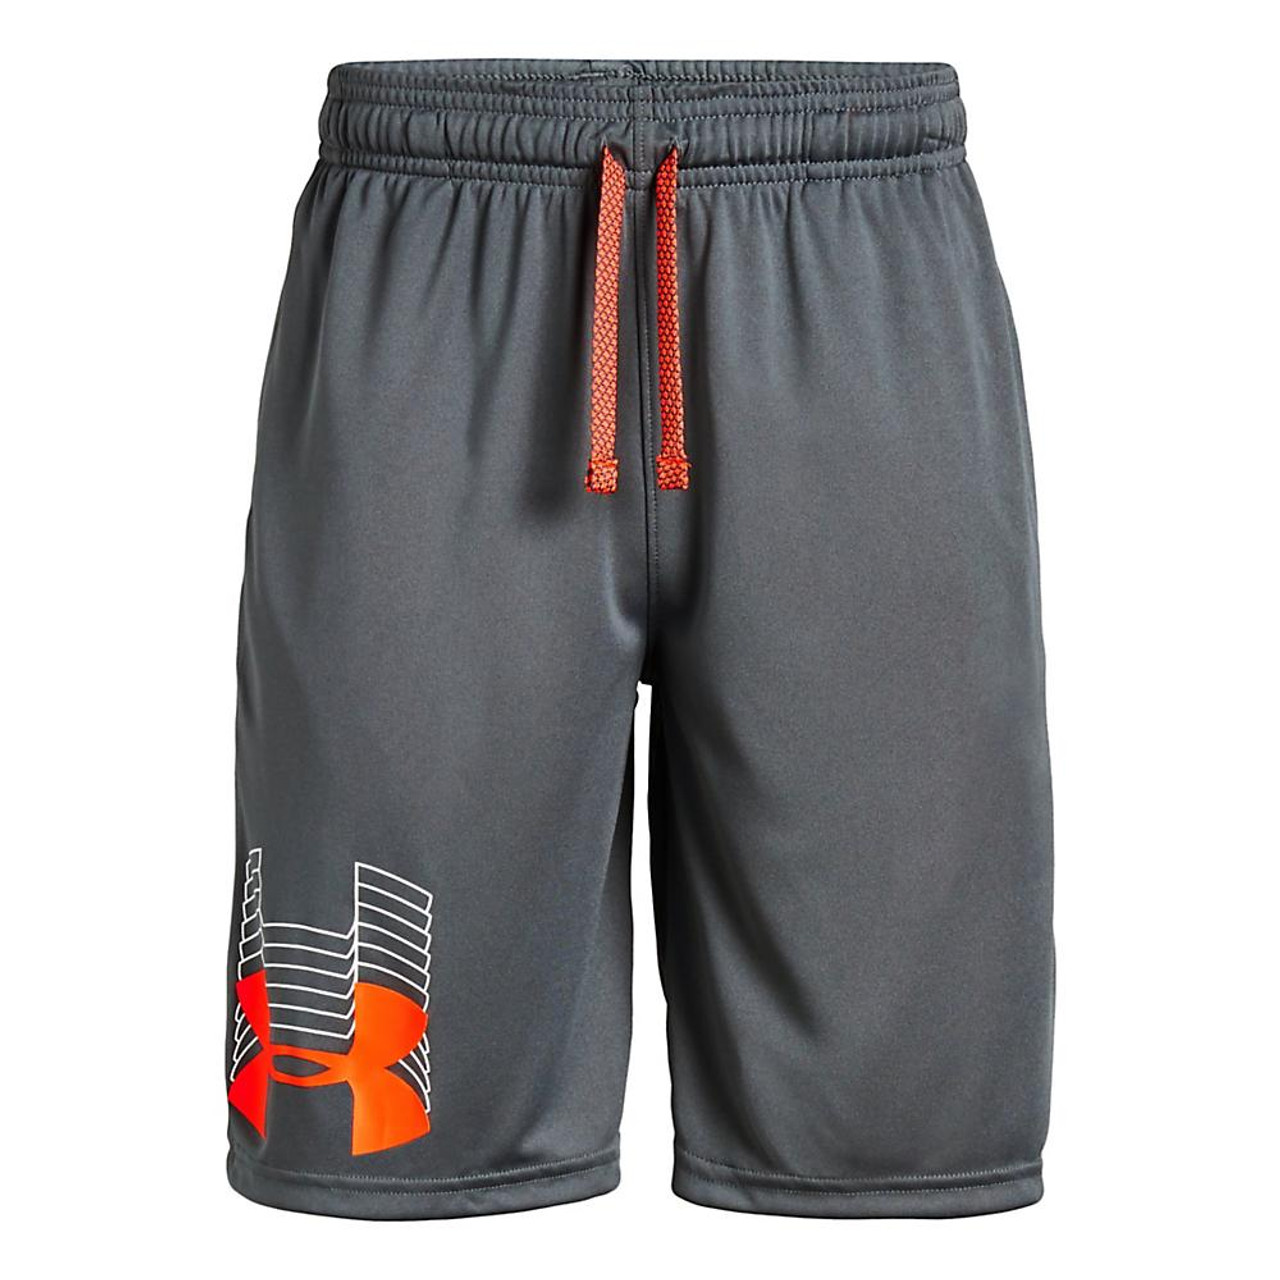 grey and orange under armour shorts